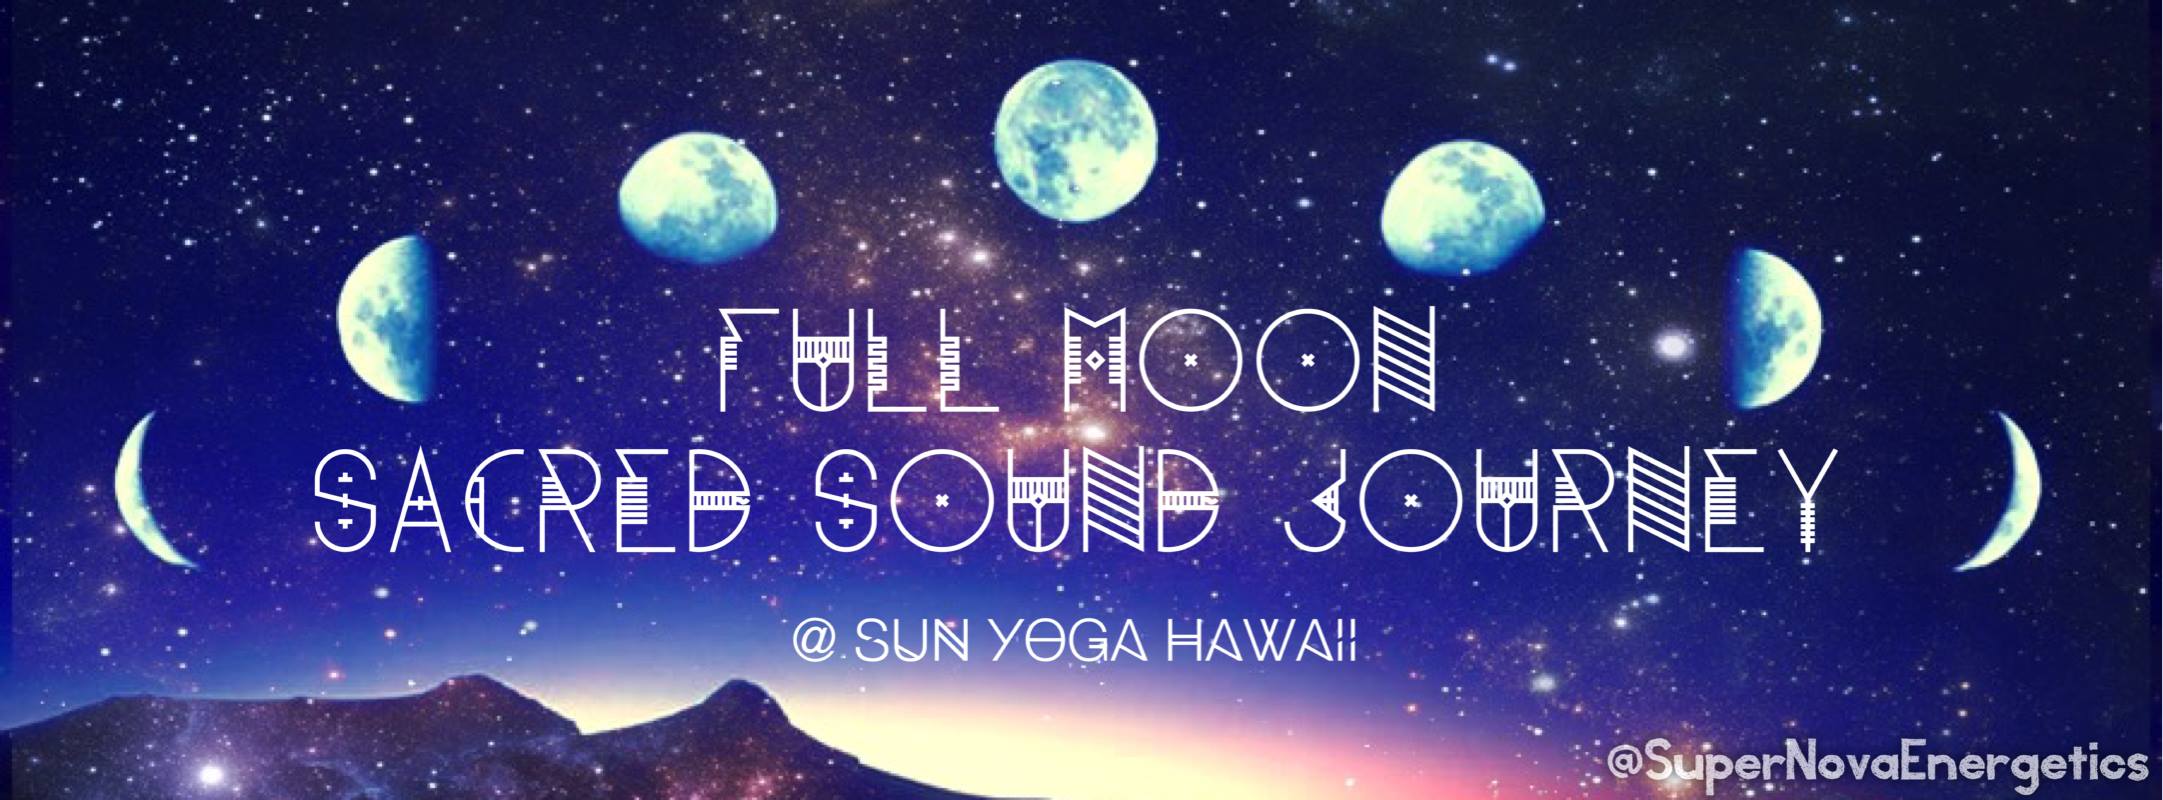 FullMoon Sun Yoga Sound Journey